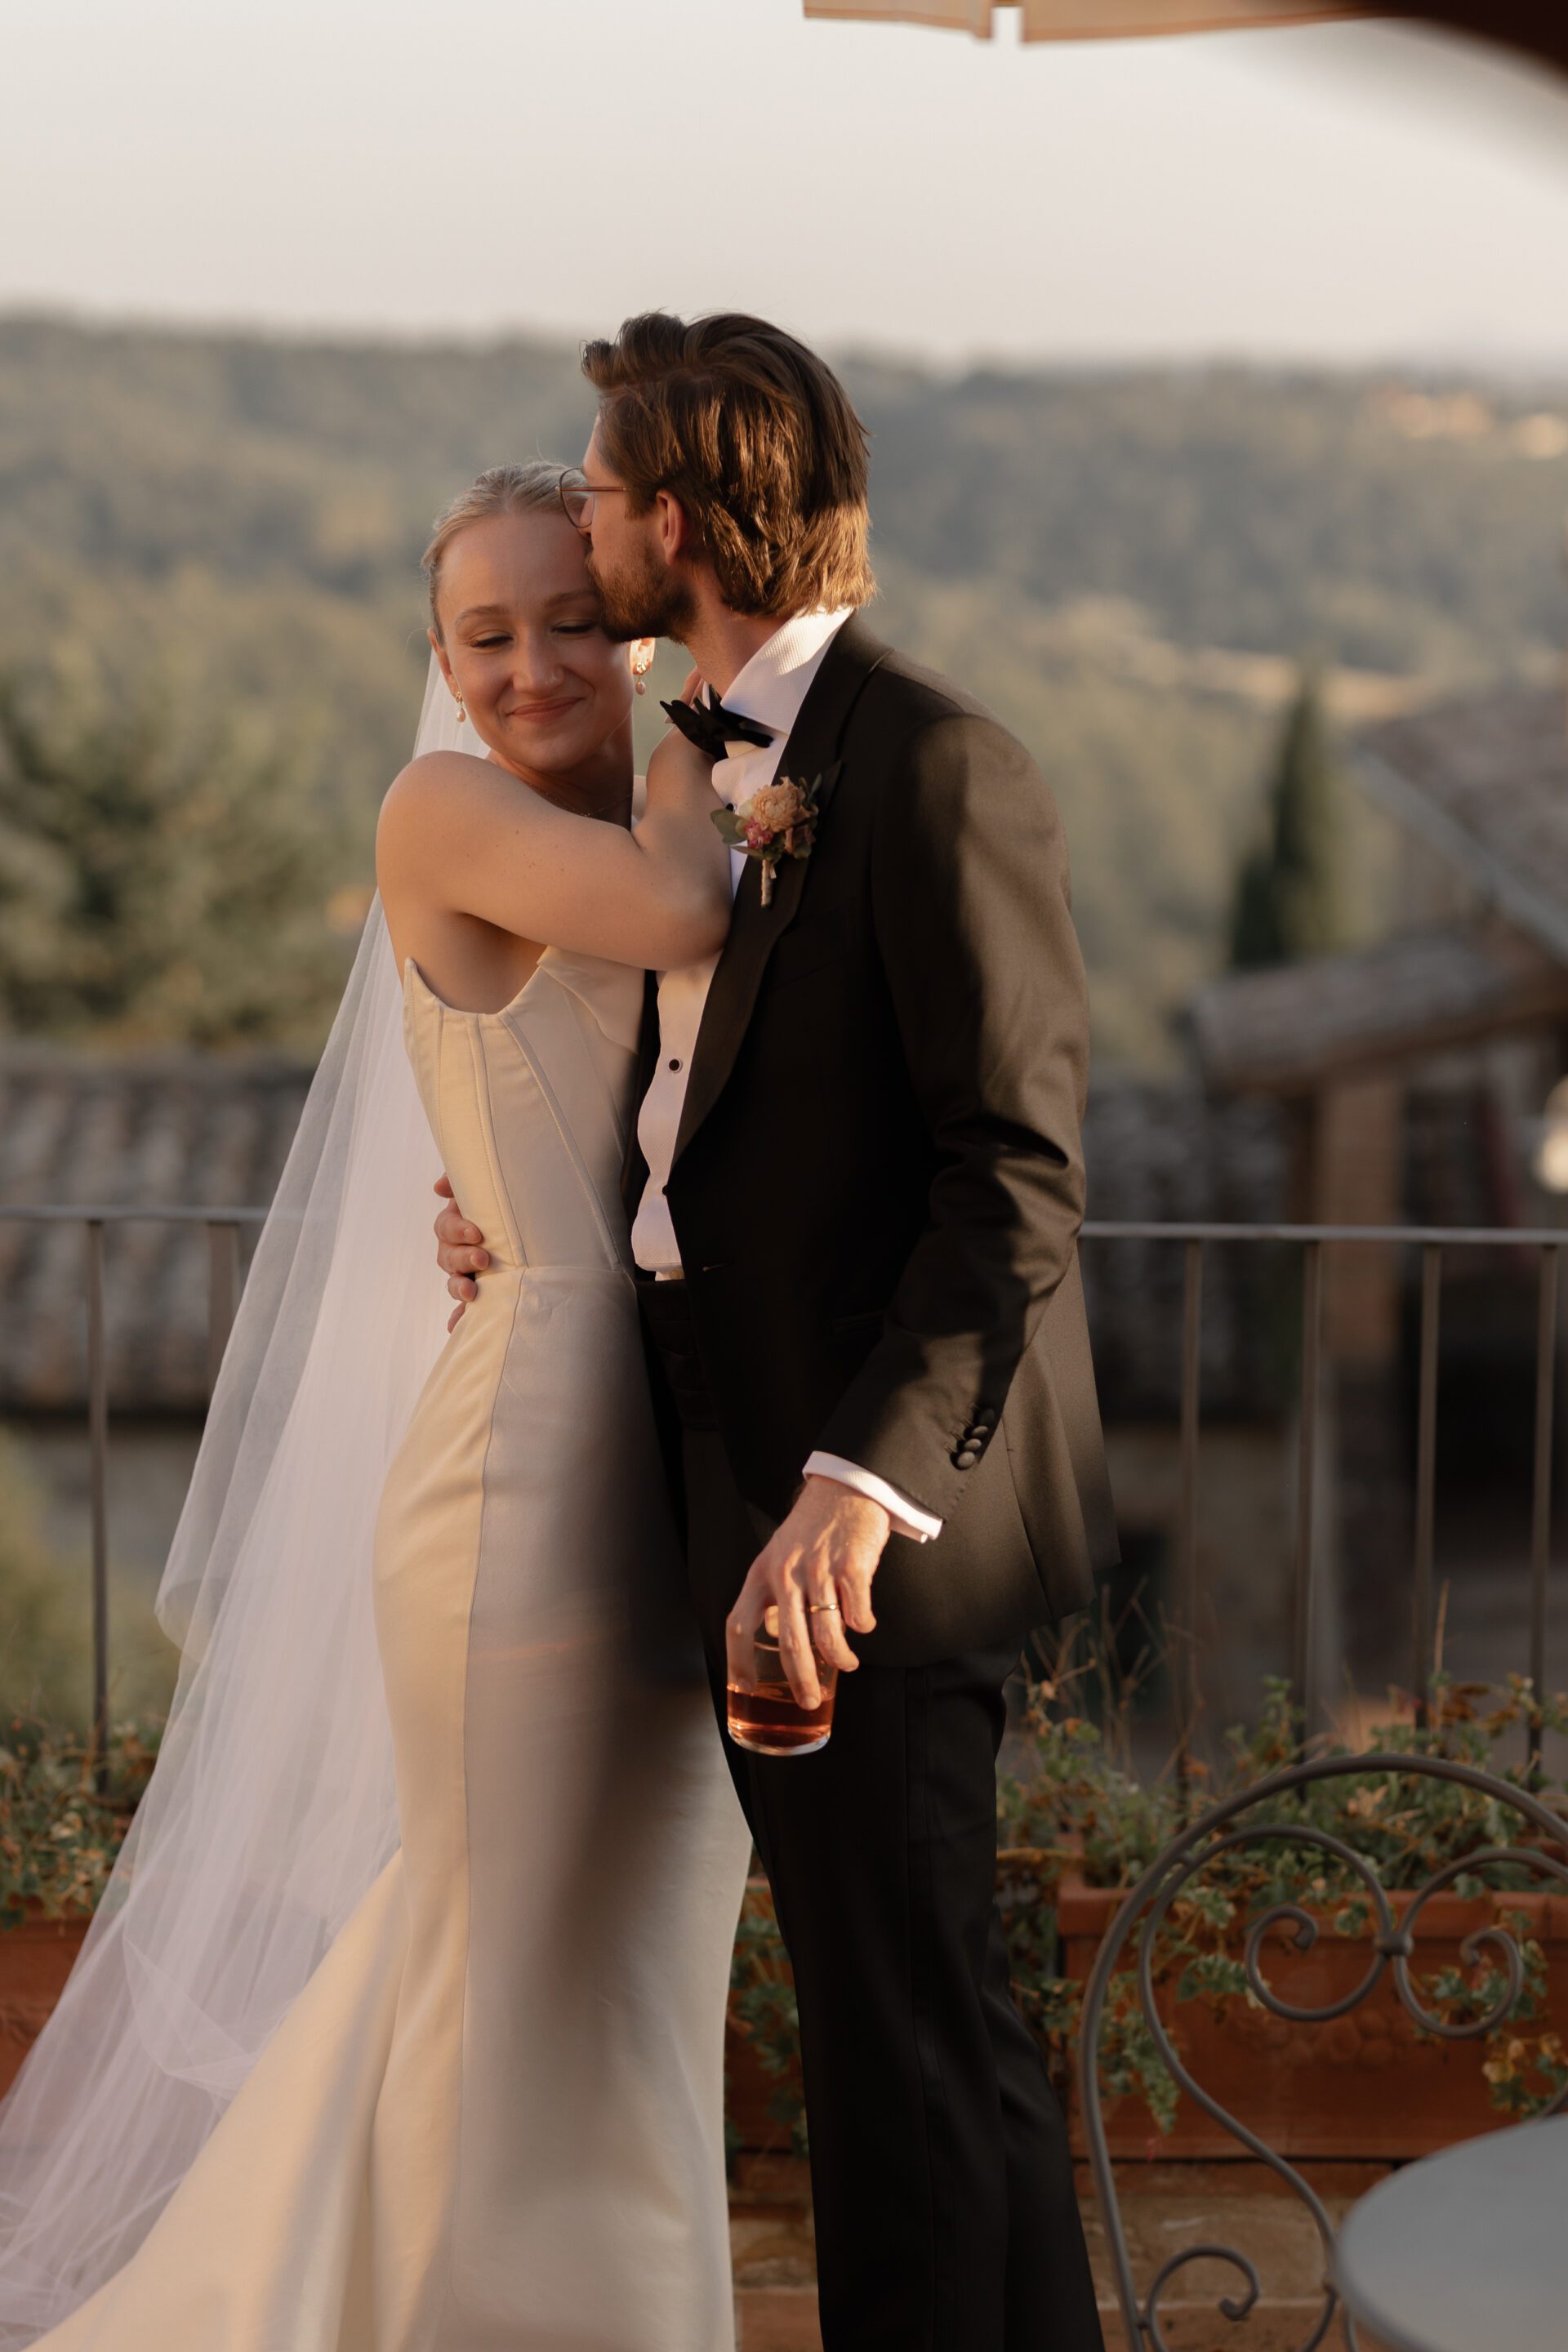 Golden hour at luxury Italian wedding in Tuscany